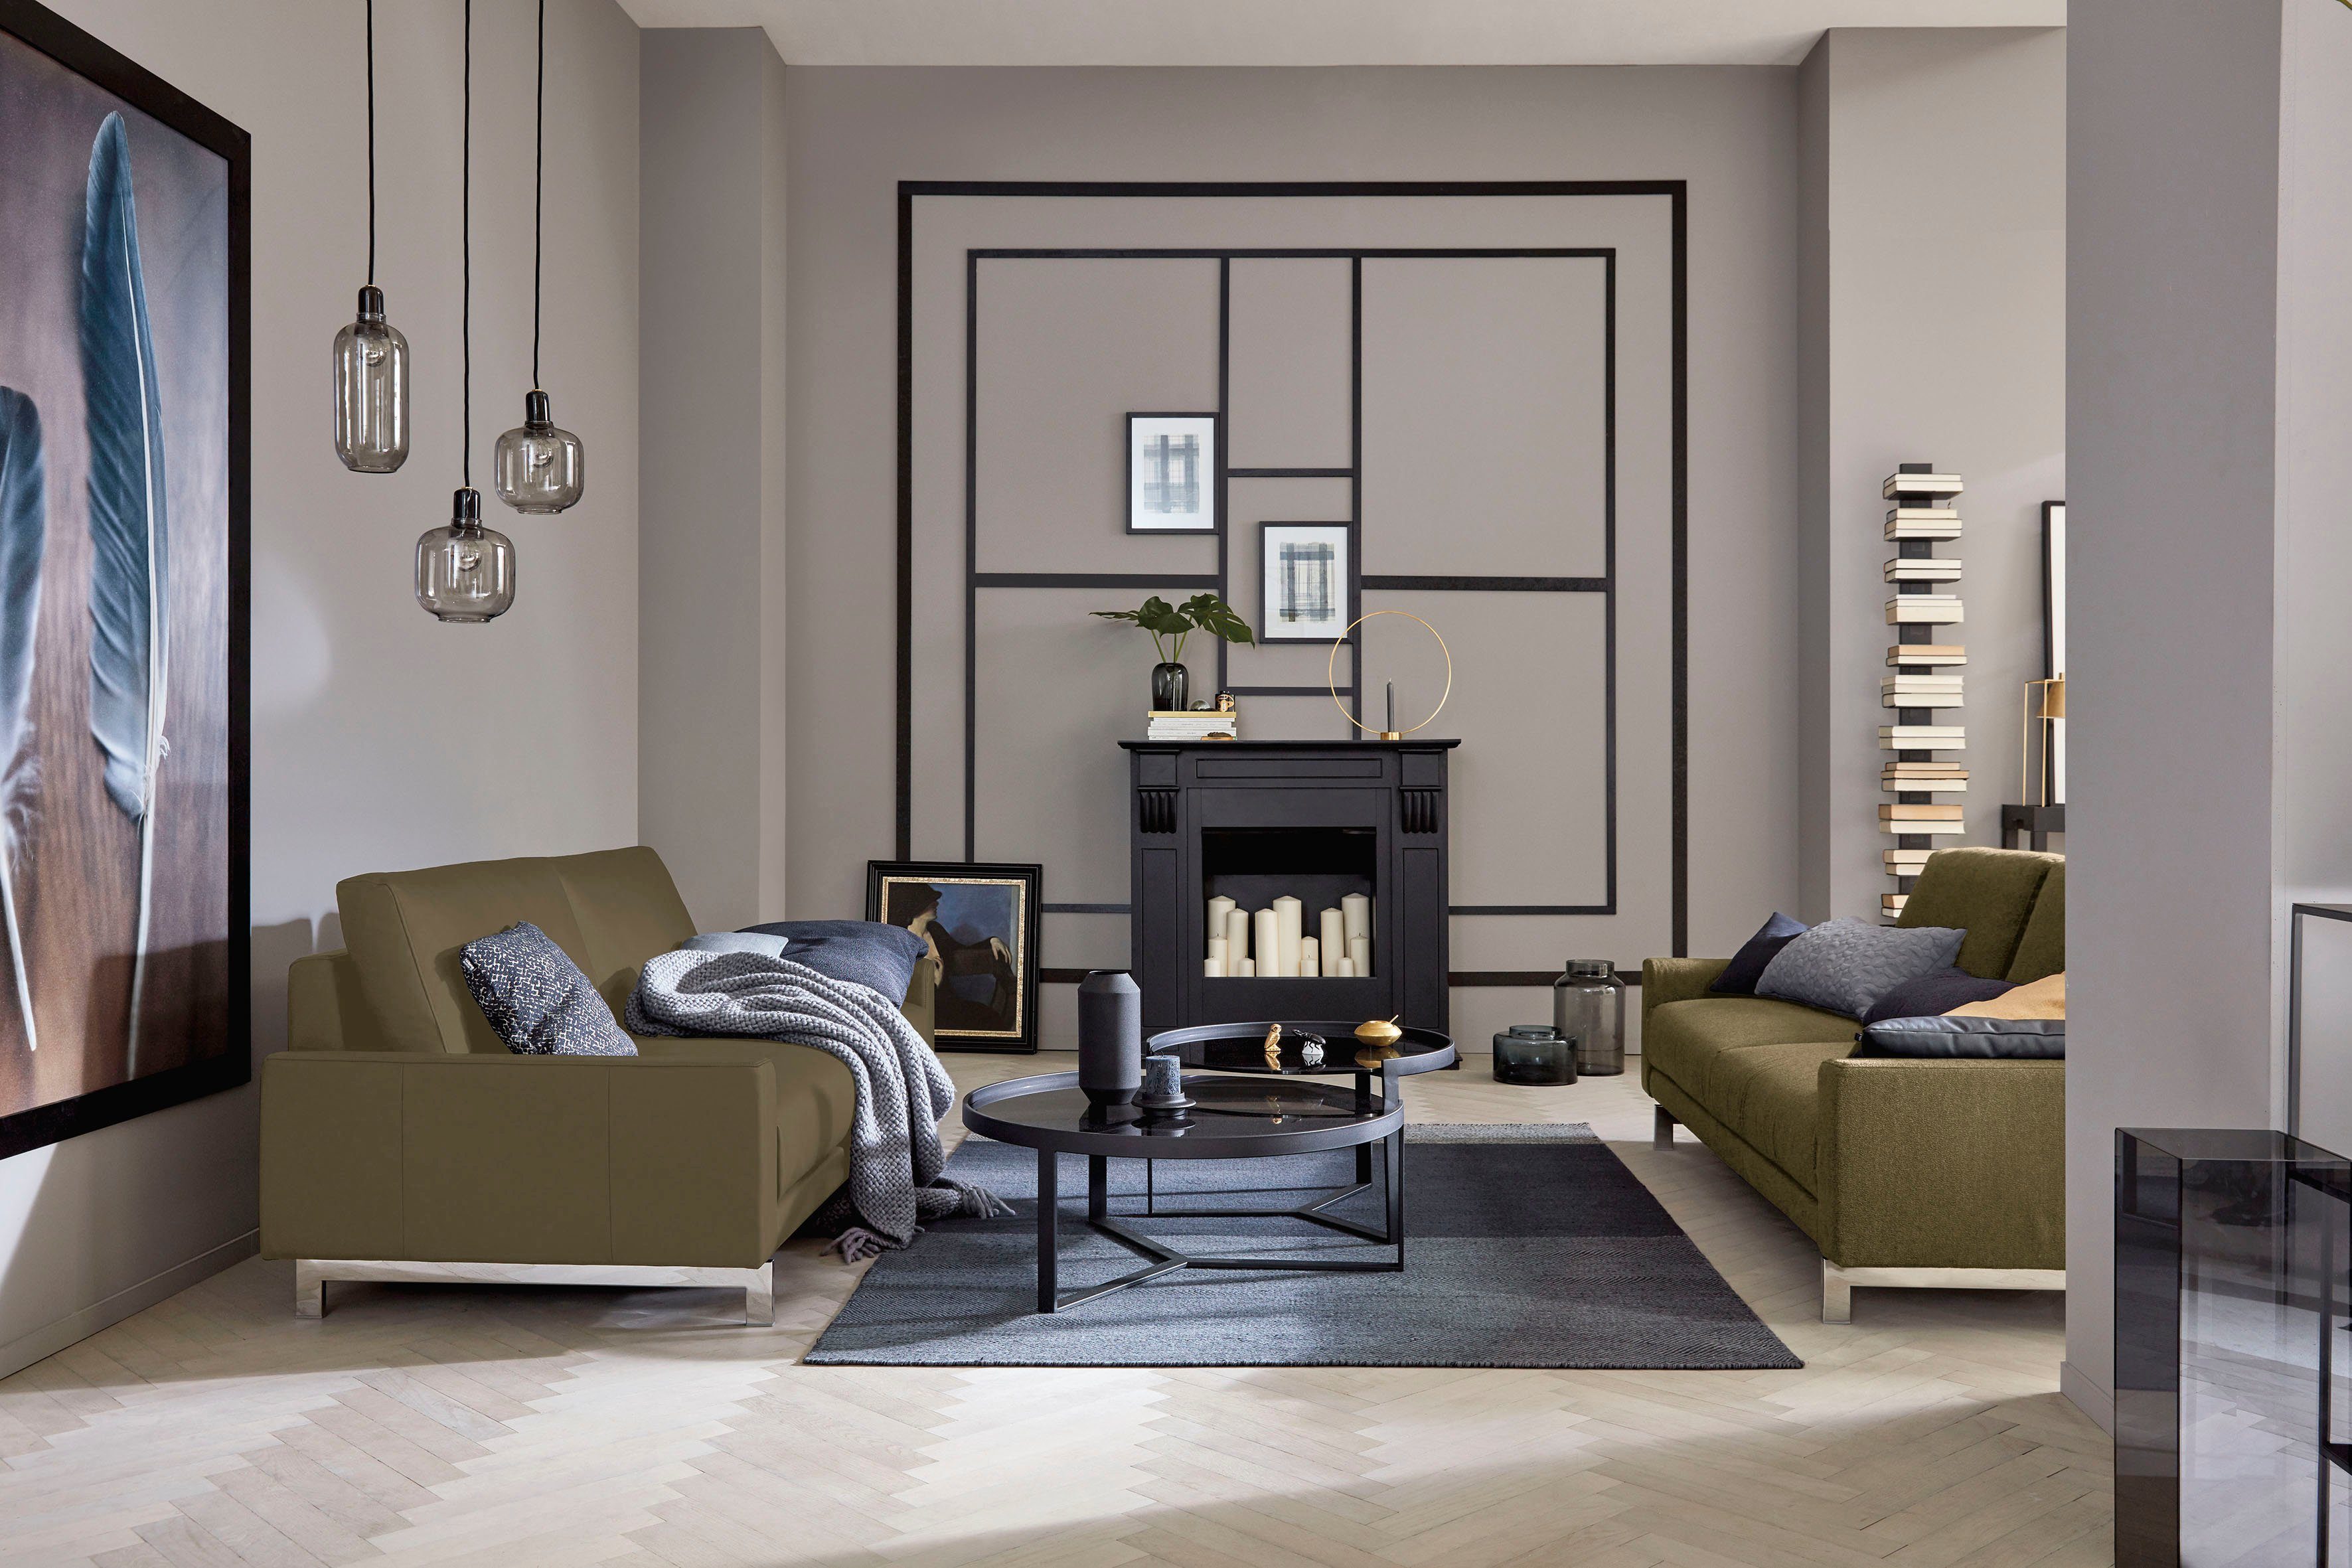 chromfarben 2-Sitzer Breite hülsta glänzend, sofa niedrig, cm 164 Armlehne hs.450, Fuß